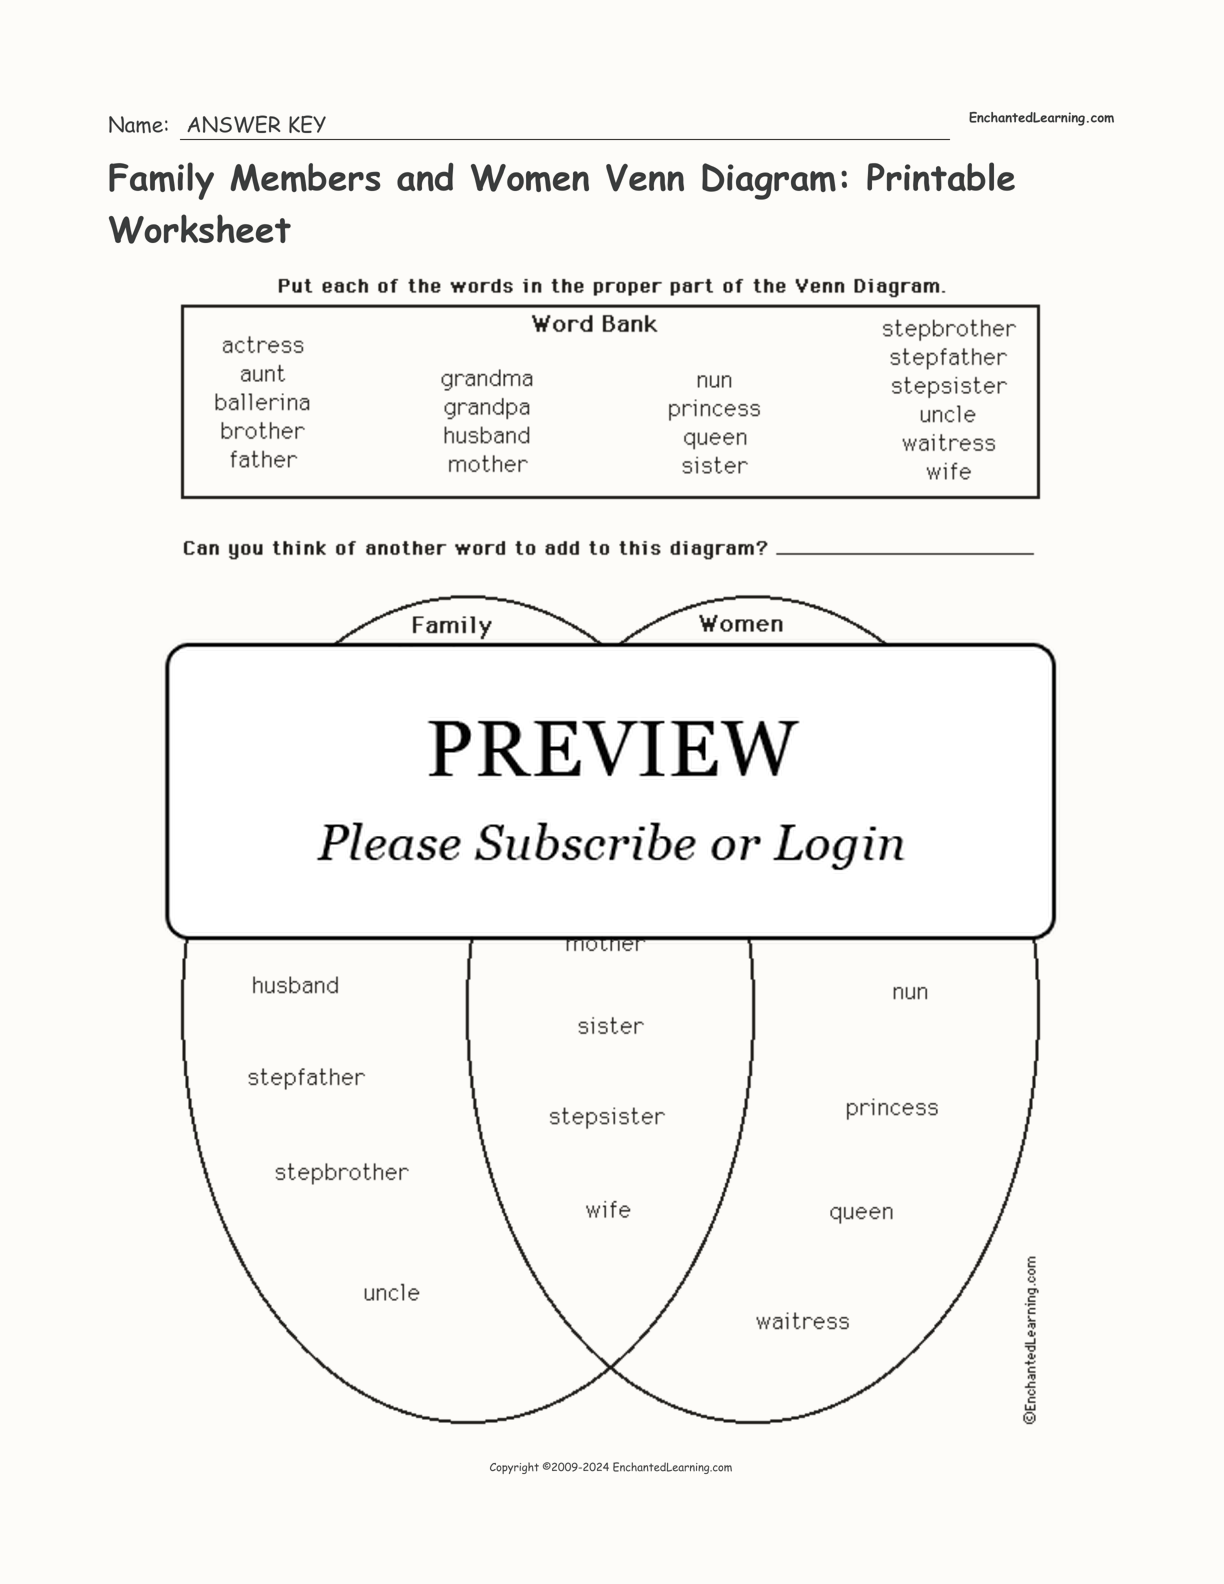 Family Members and Women Venn Diagram: Printable Worksheet interactive worksheet page 2